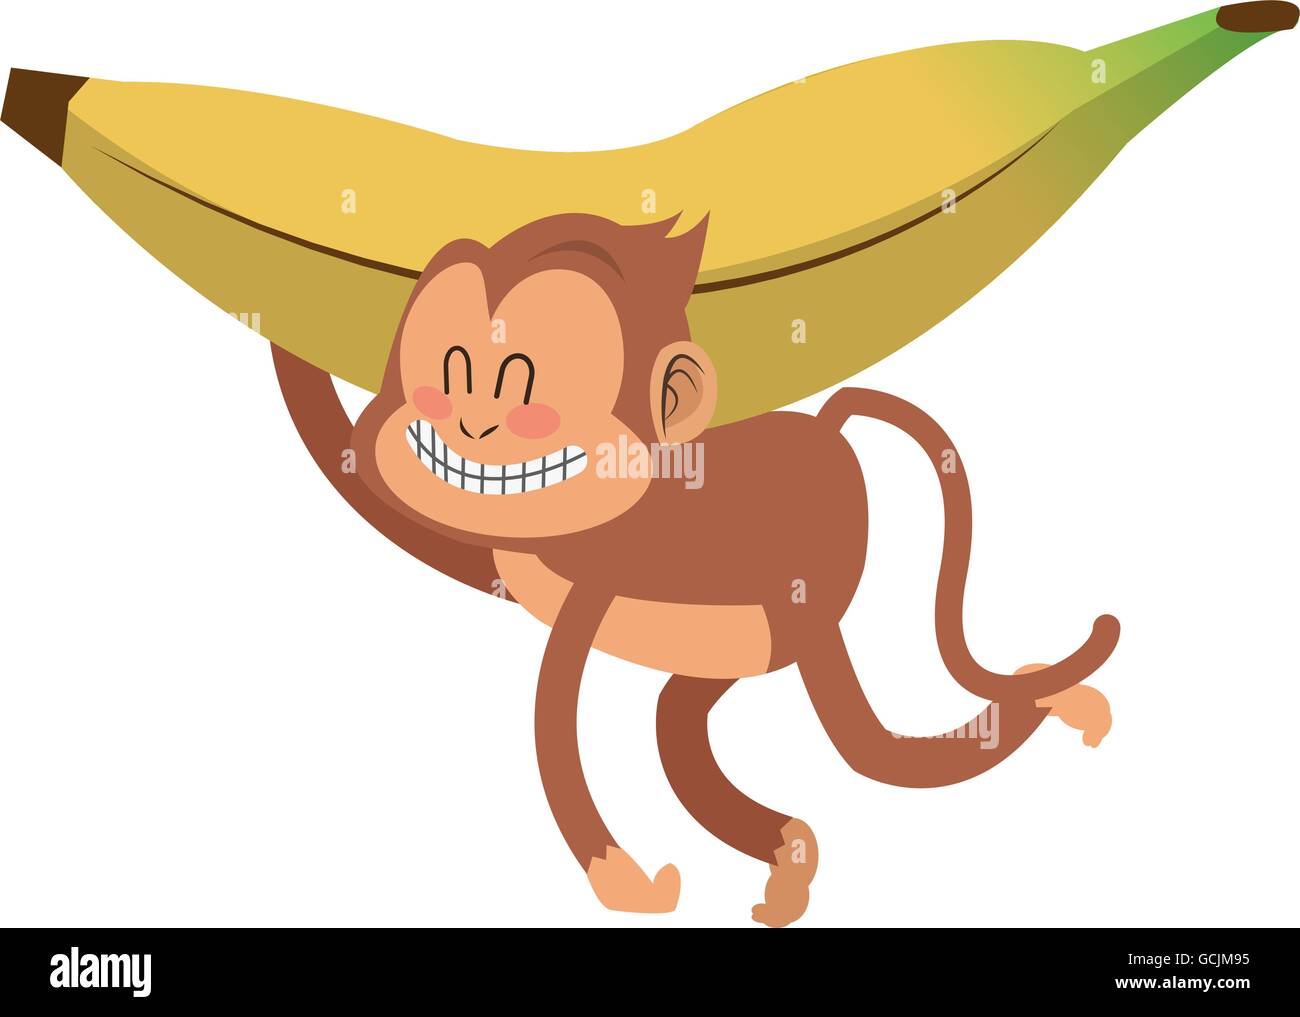 grinning monkey cartoon